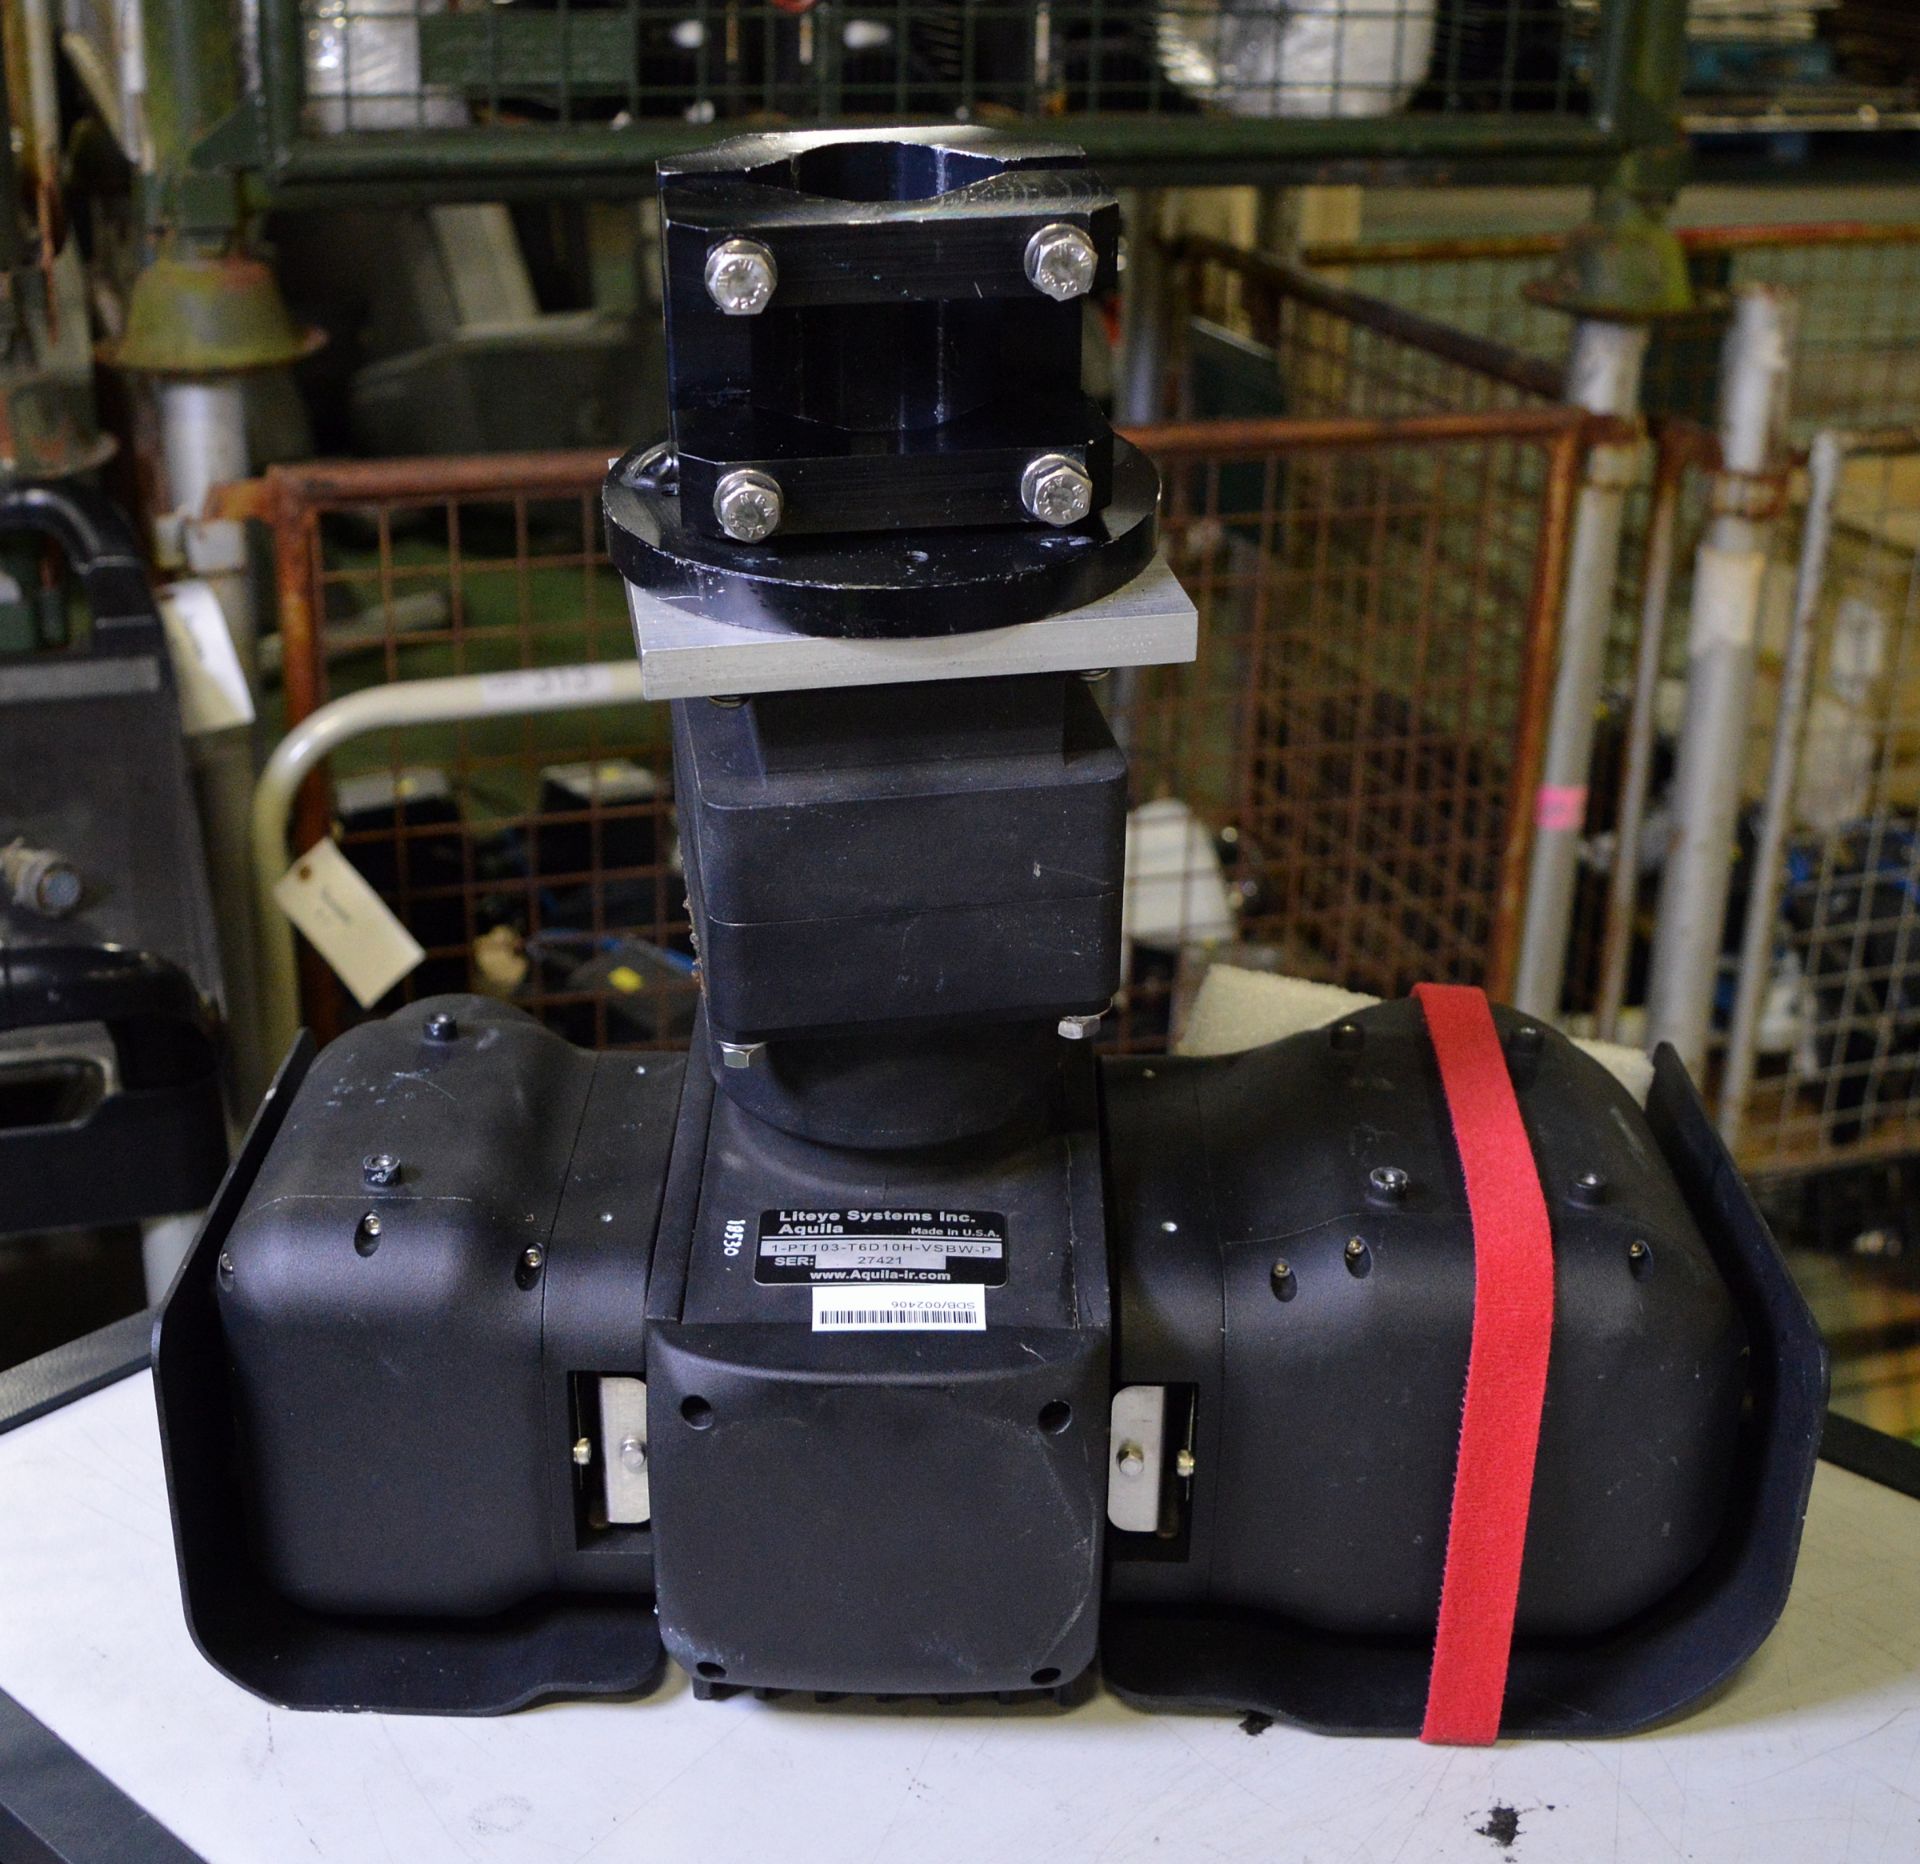 2x Aquila Thermal Surveillance Cameras in Peli 1650 case - Image 7 of 7